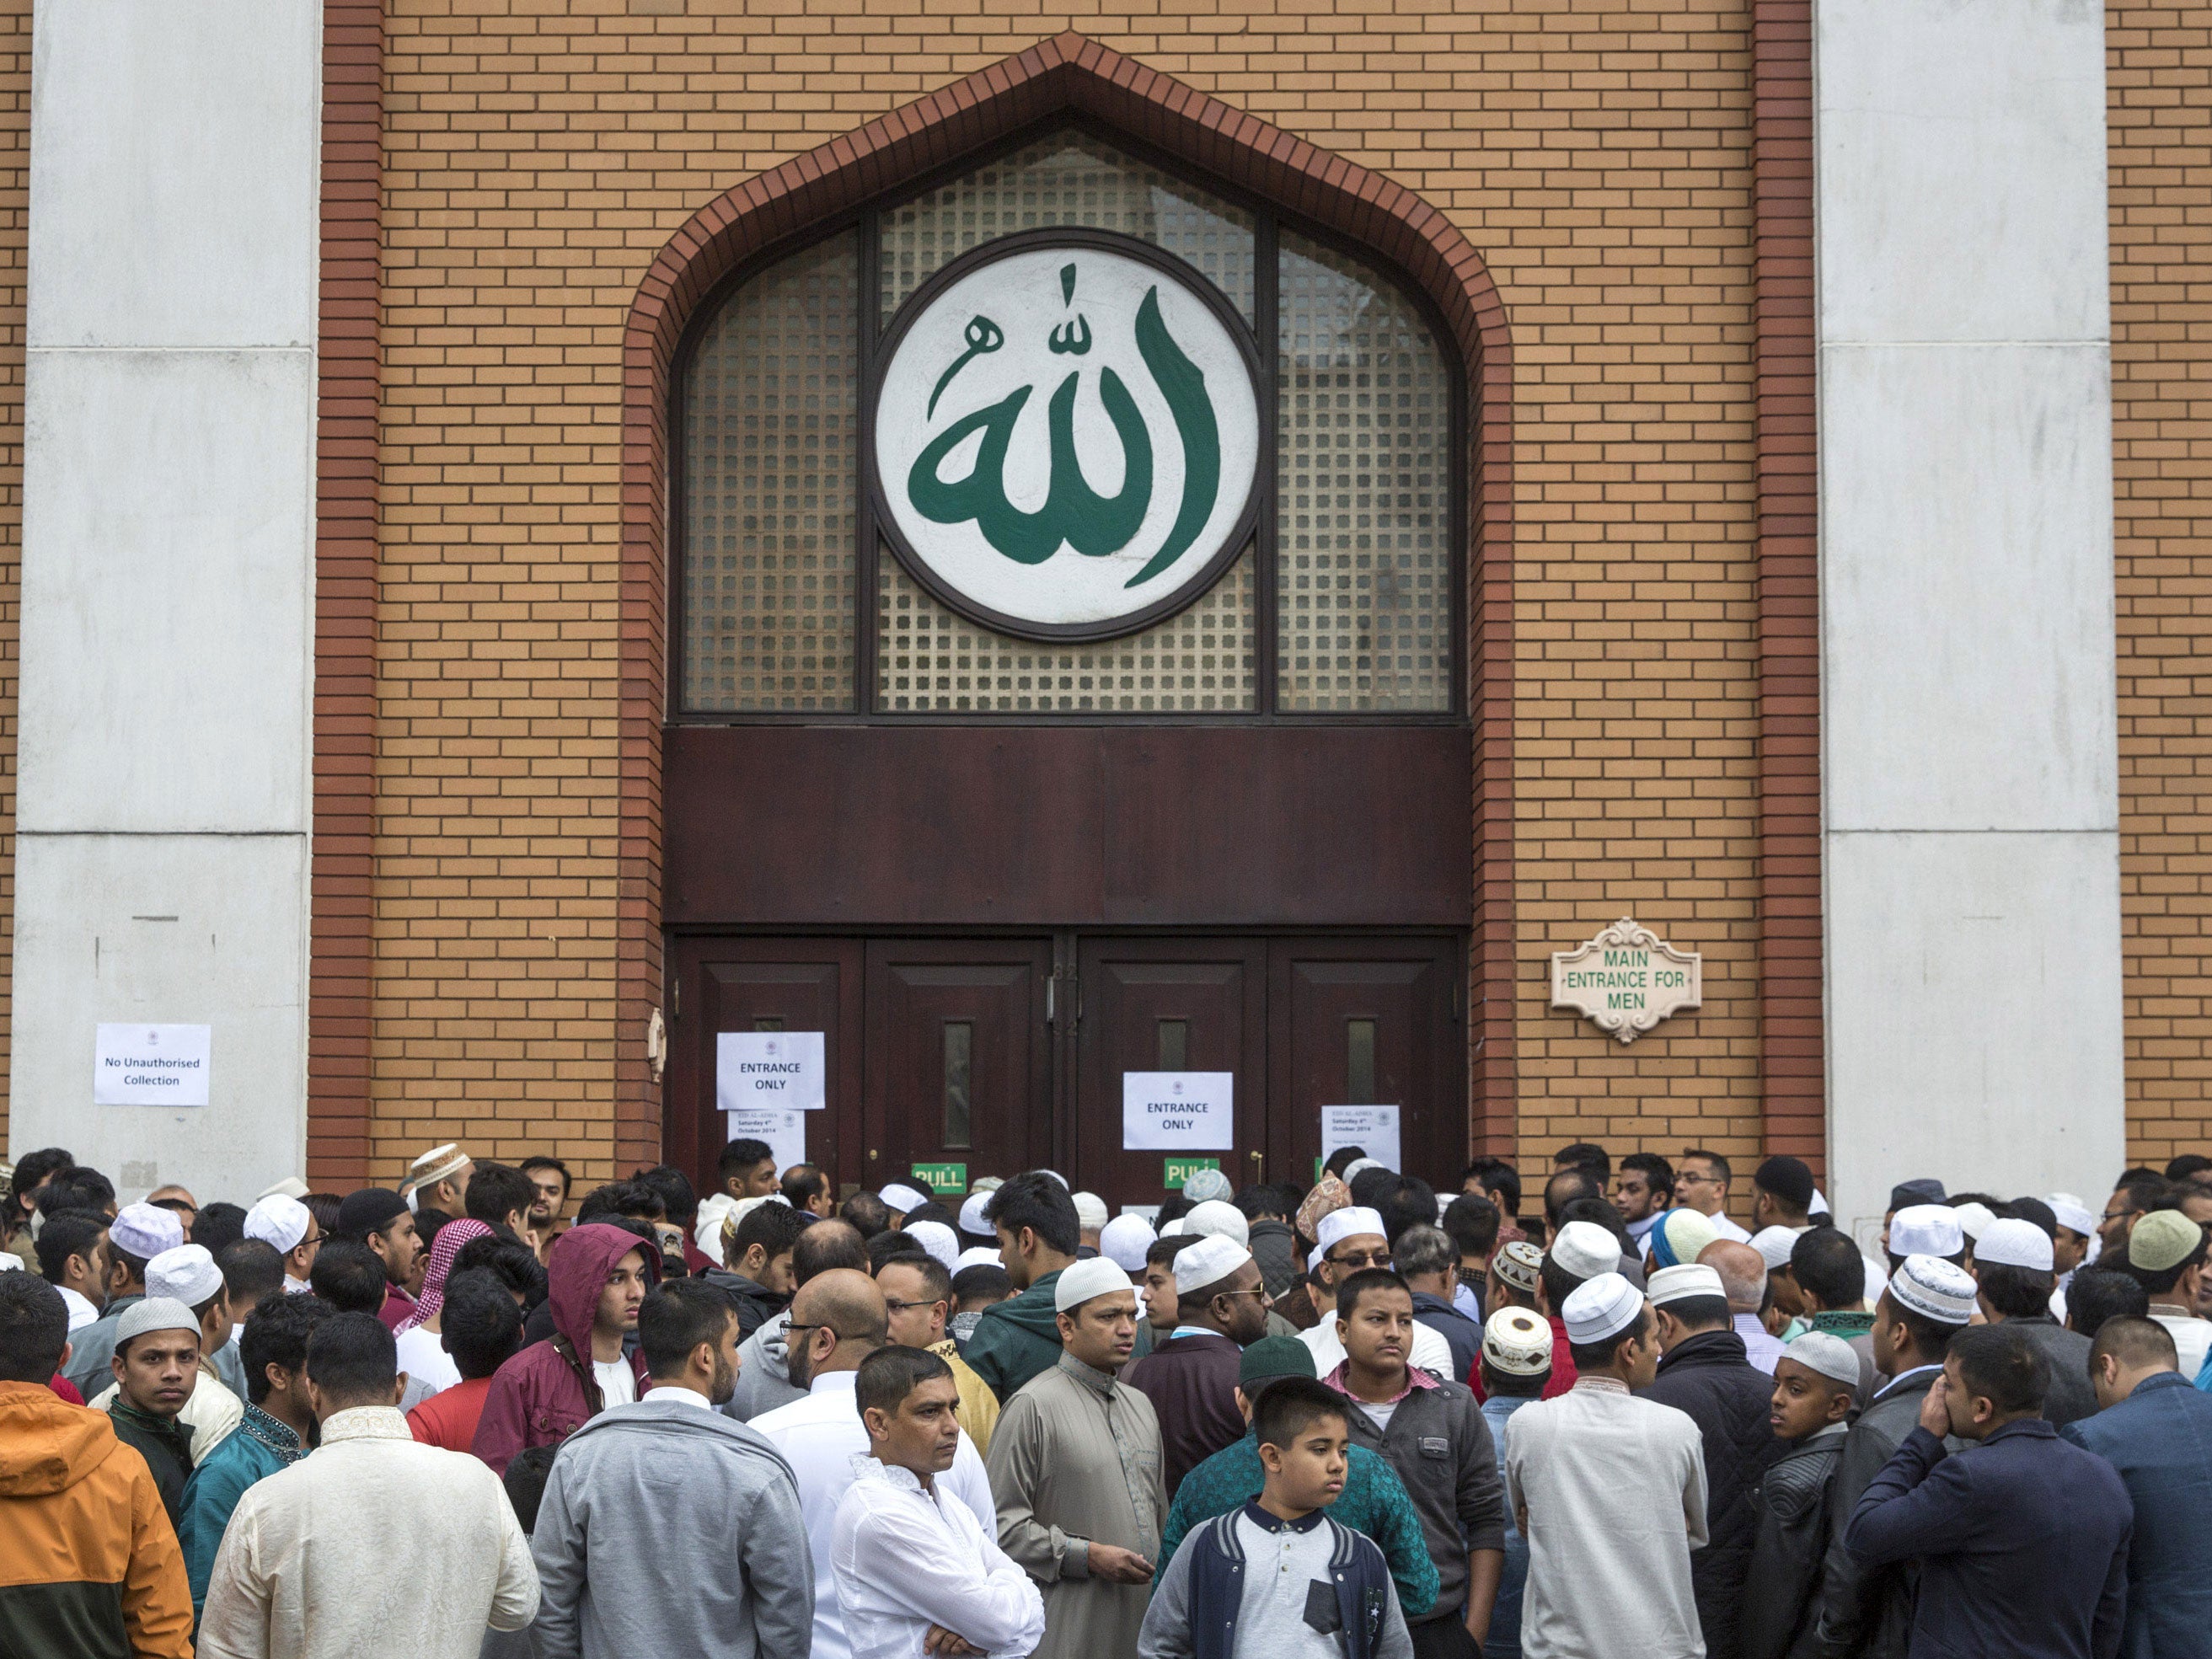 Men wait to enter the East London Mosque on Eid al-Adha 2014